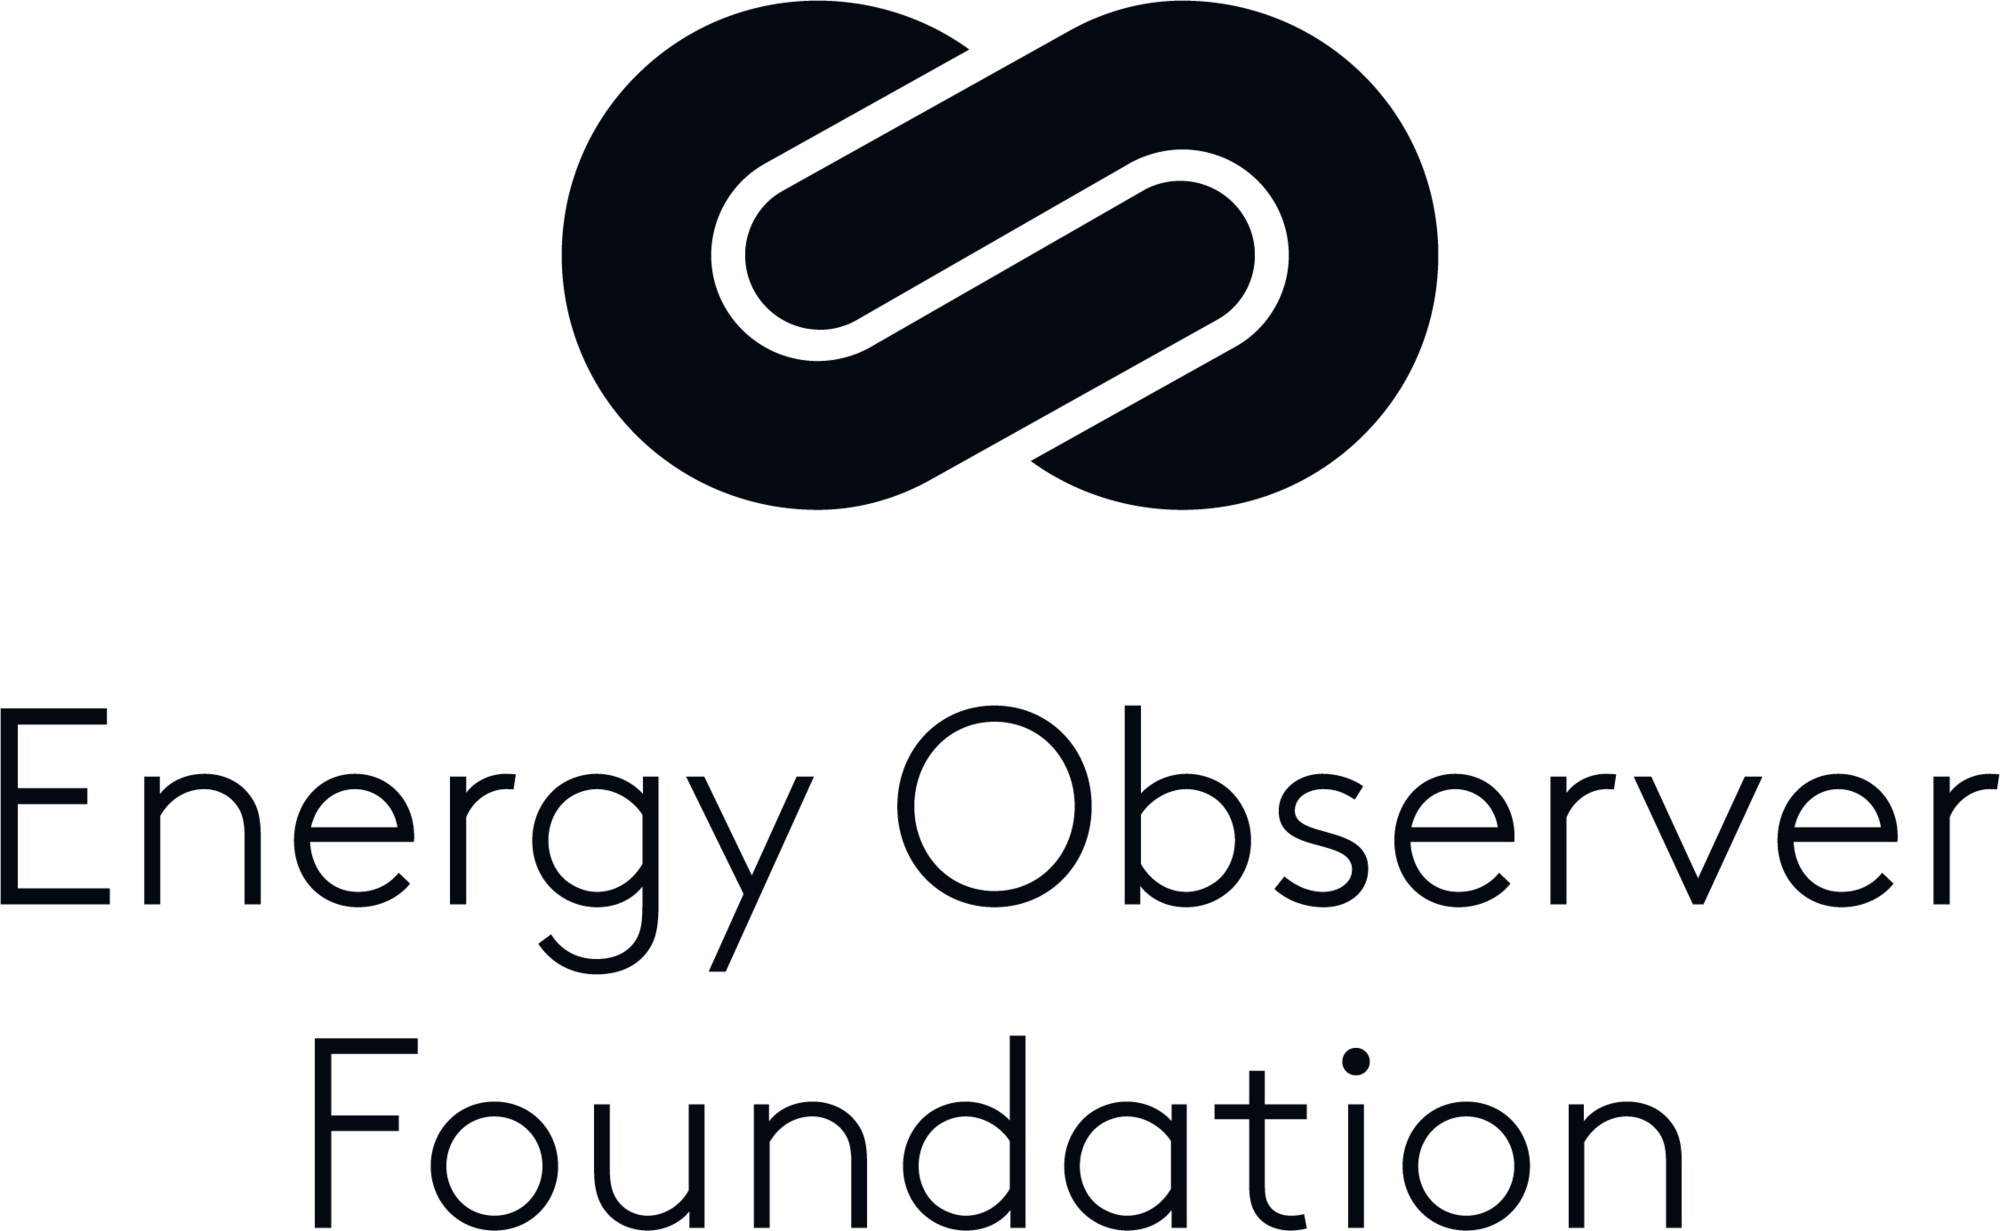 Energy Observer Foundation